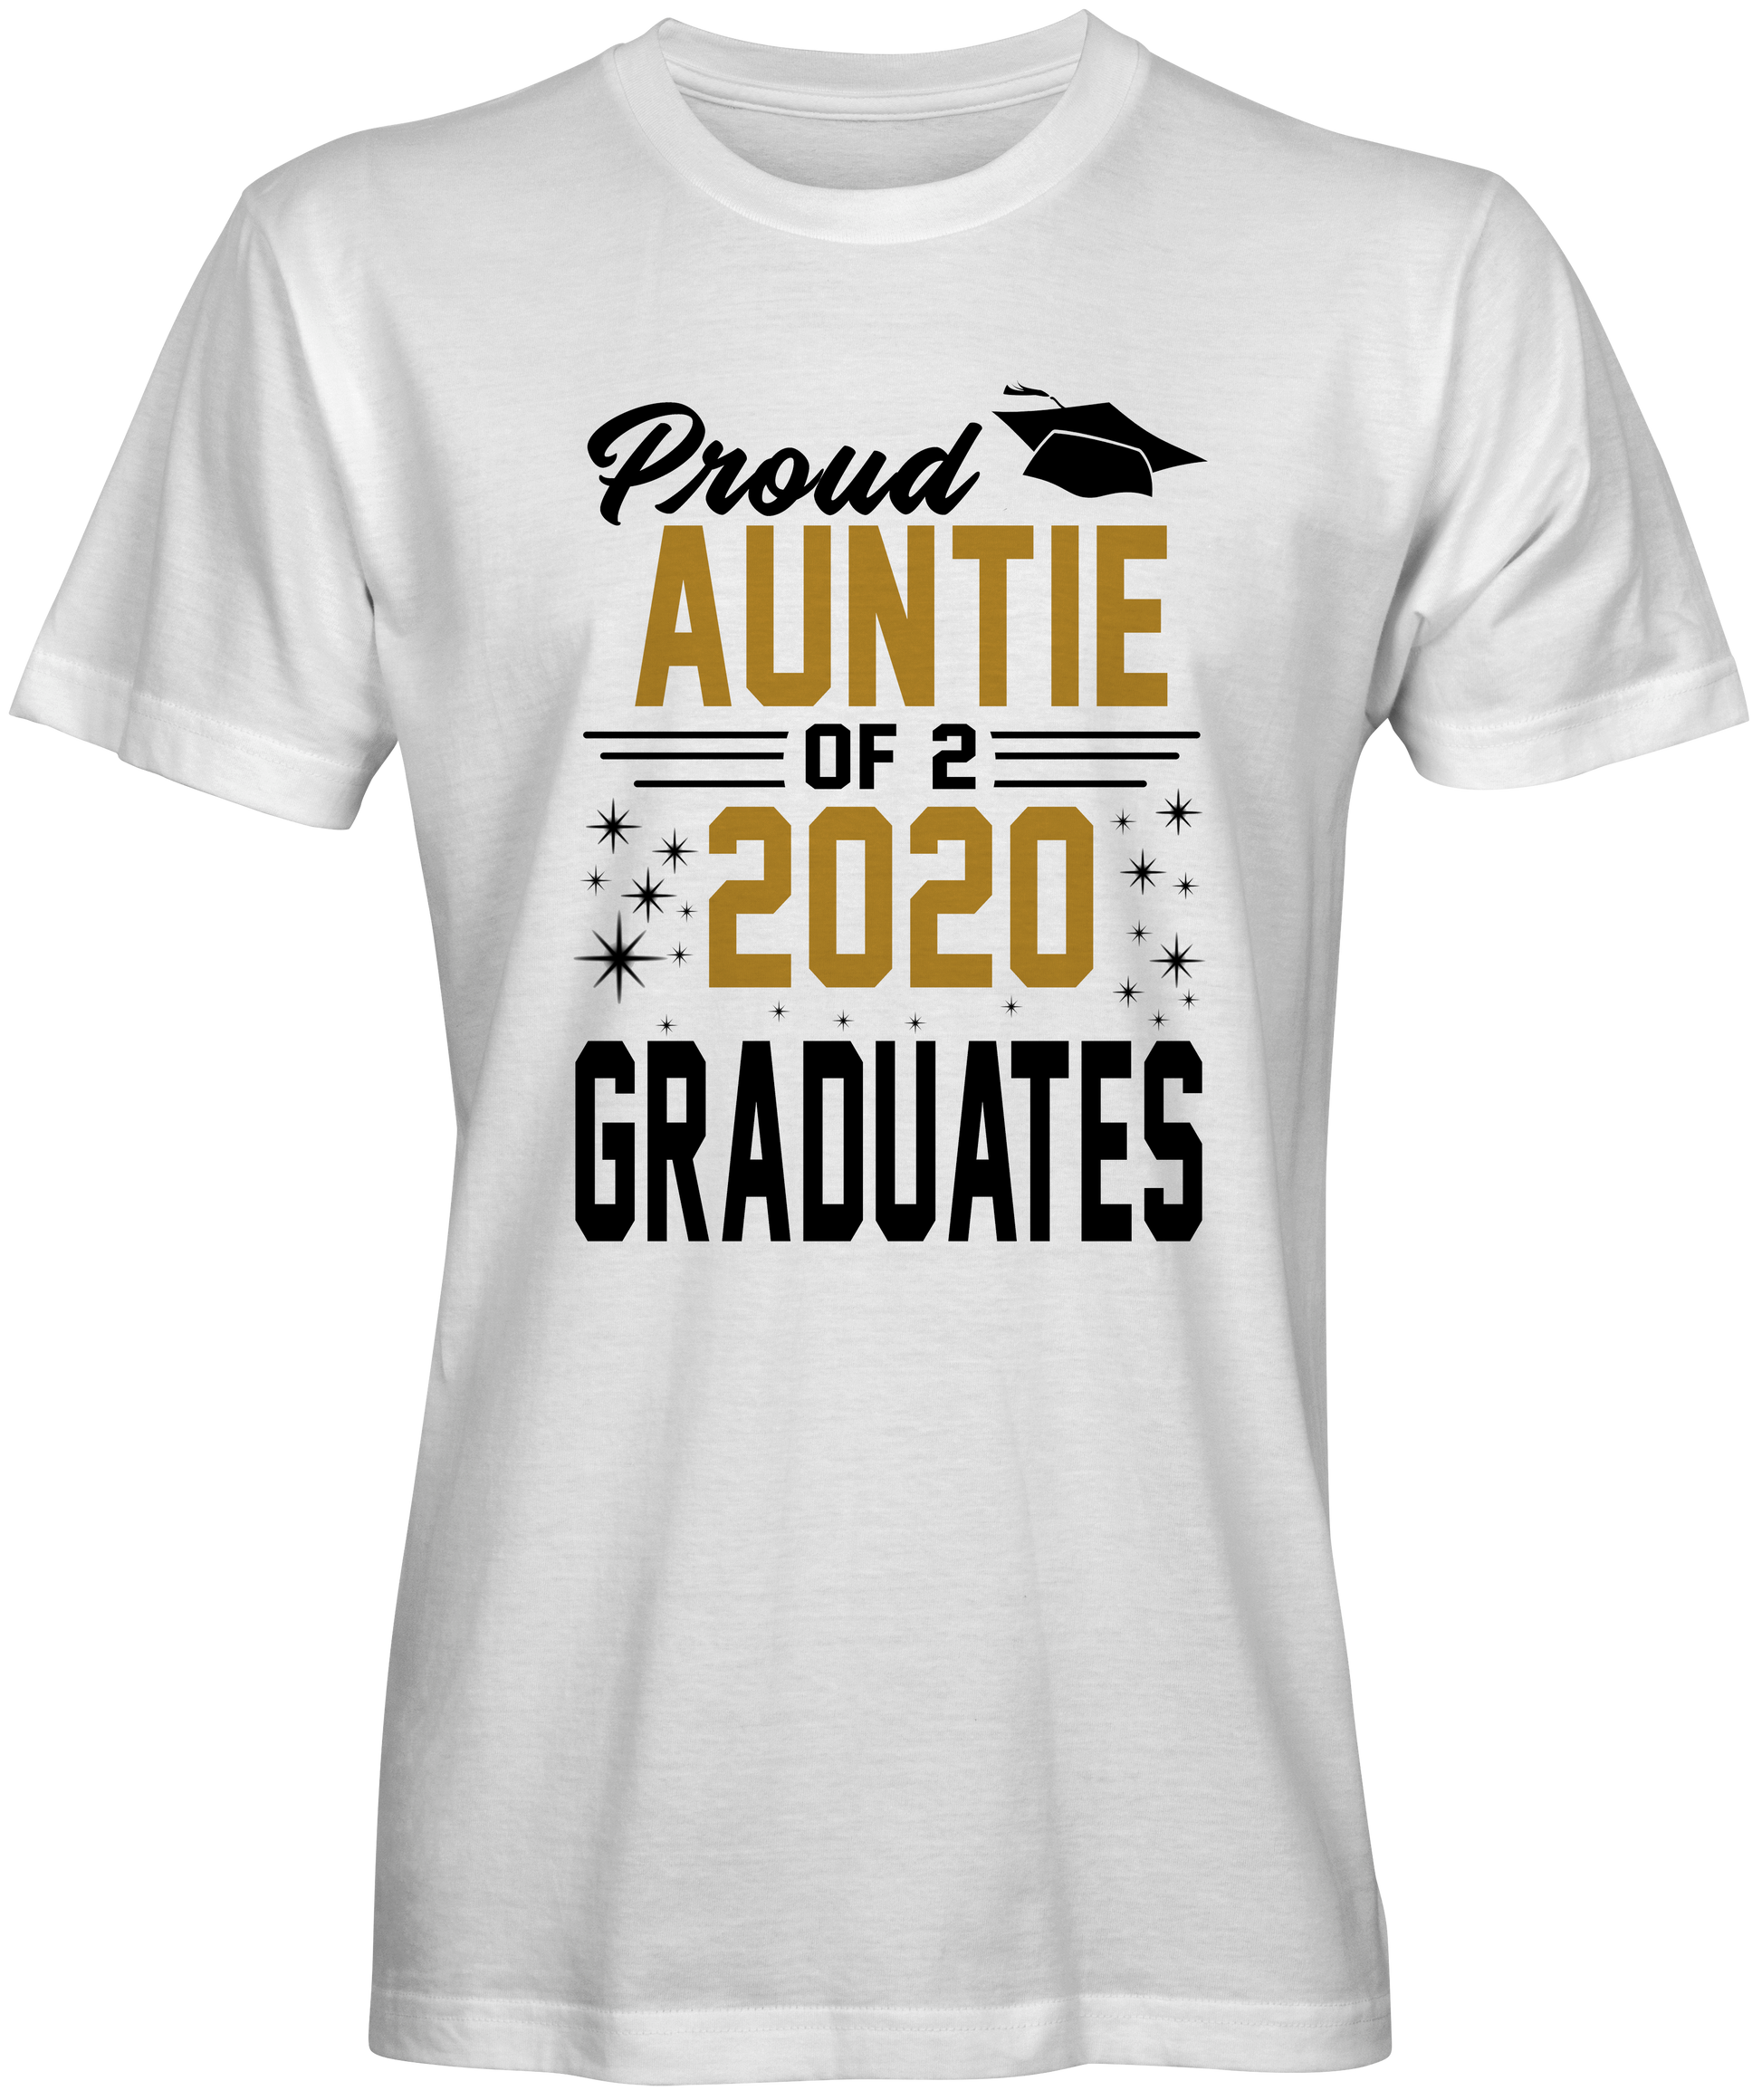 Proud Auntie of 2 Graduates T-shirt